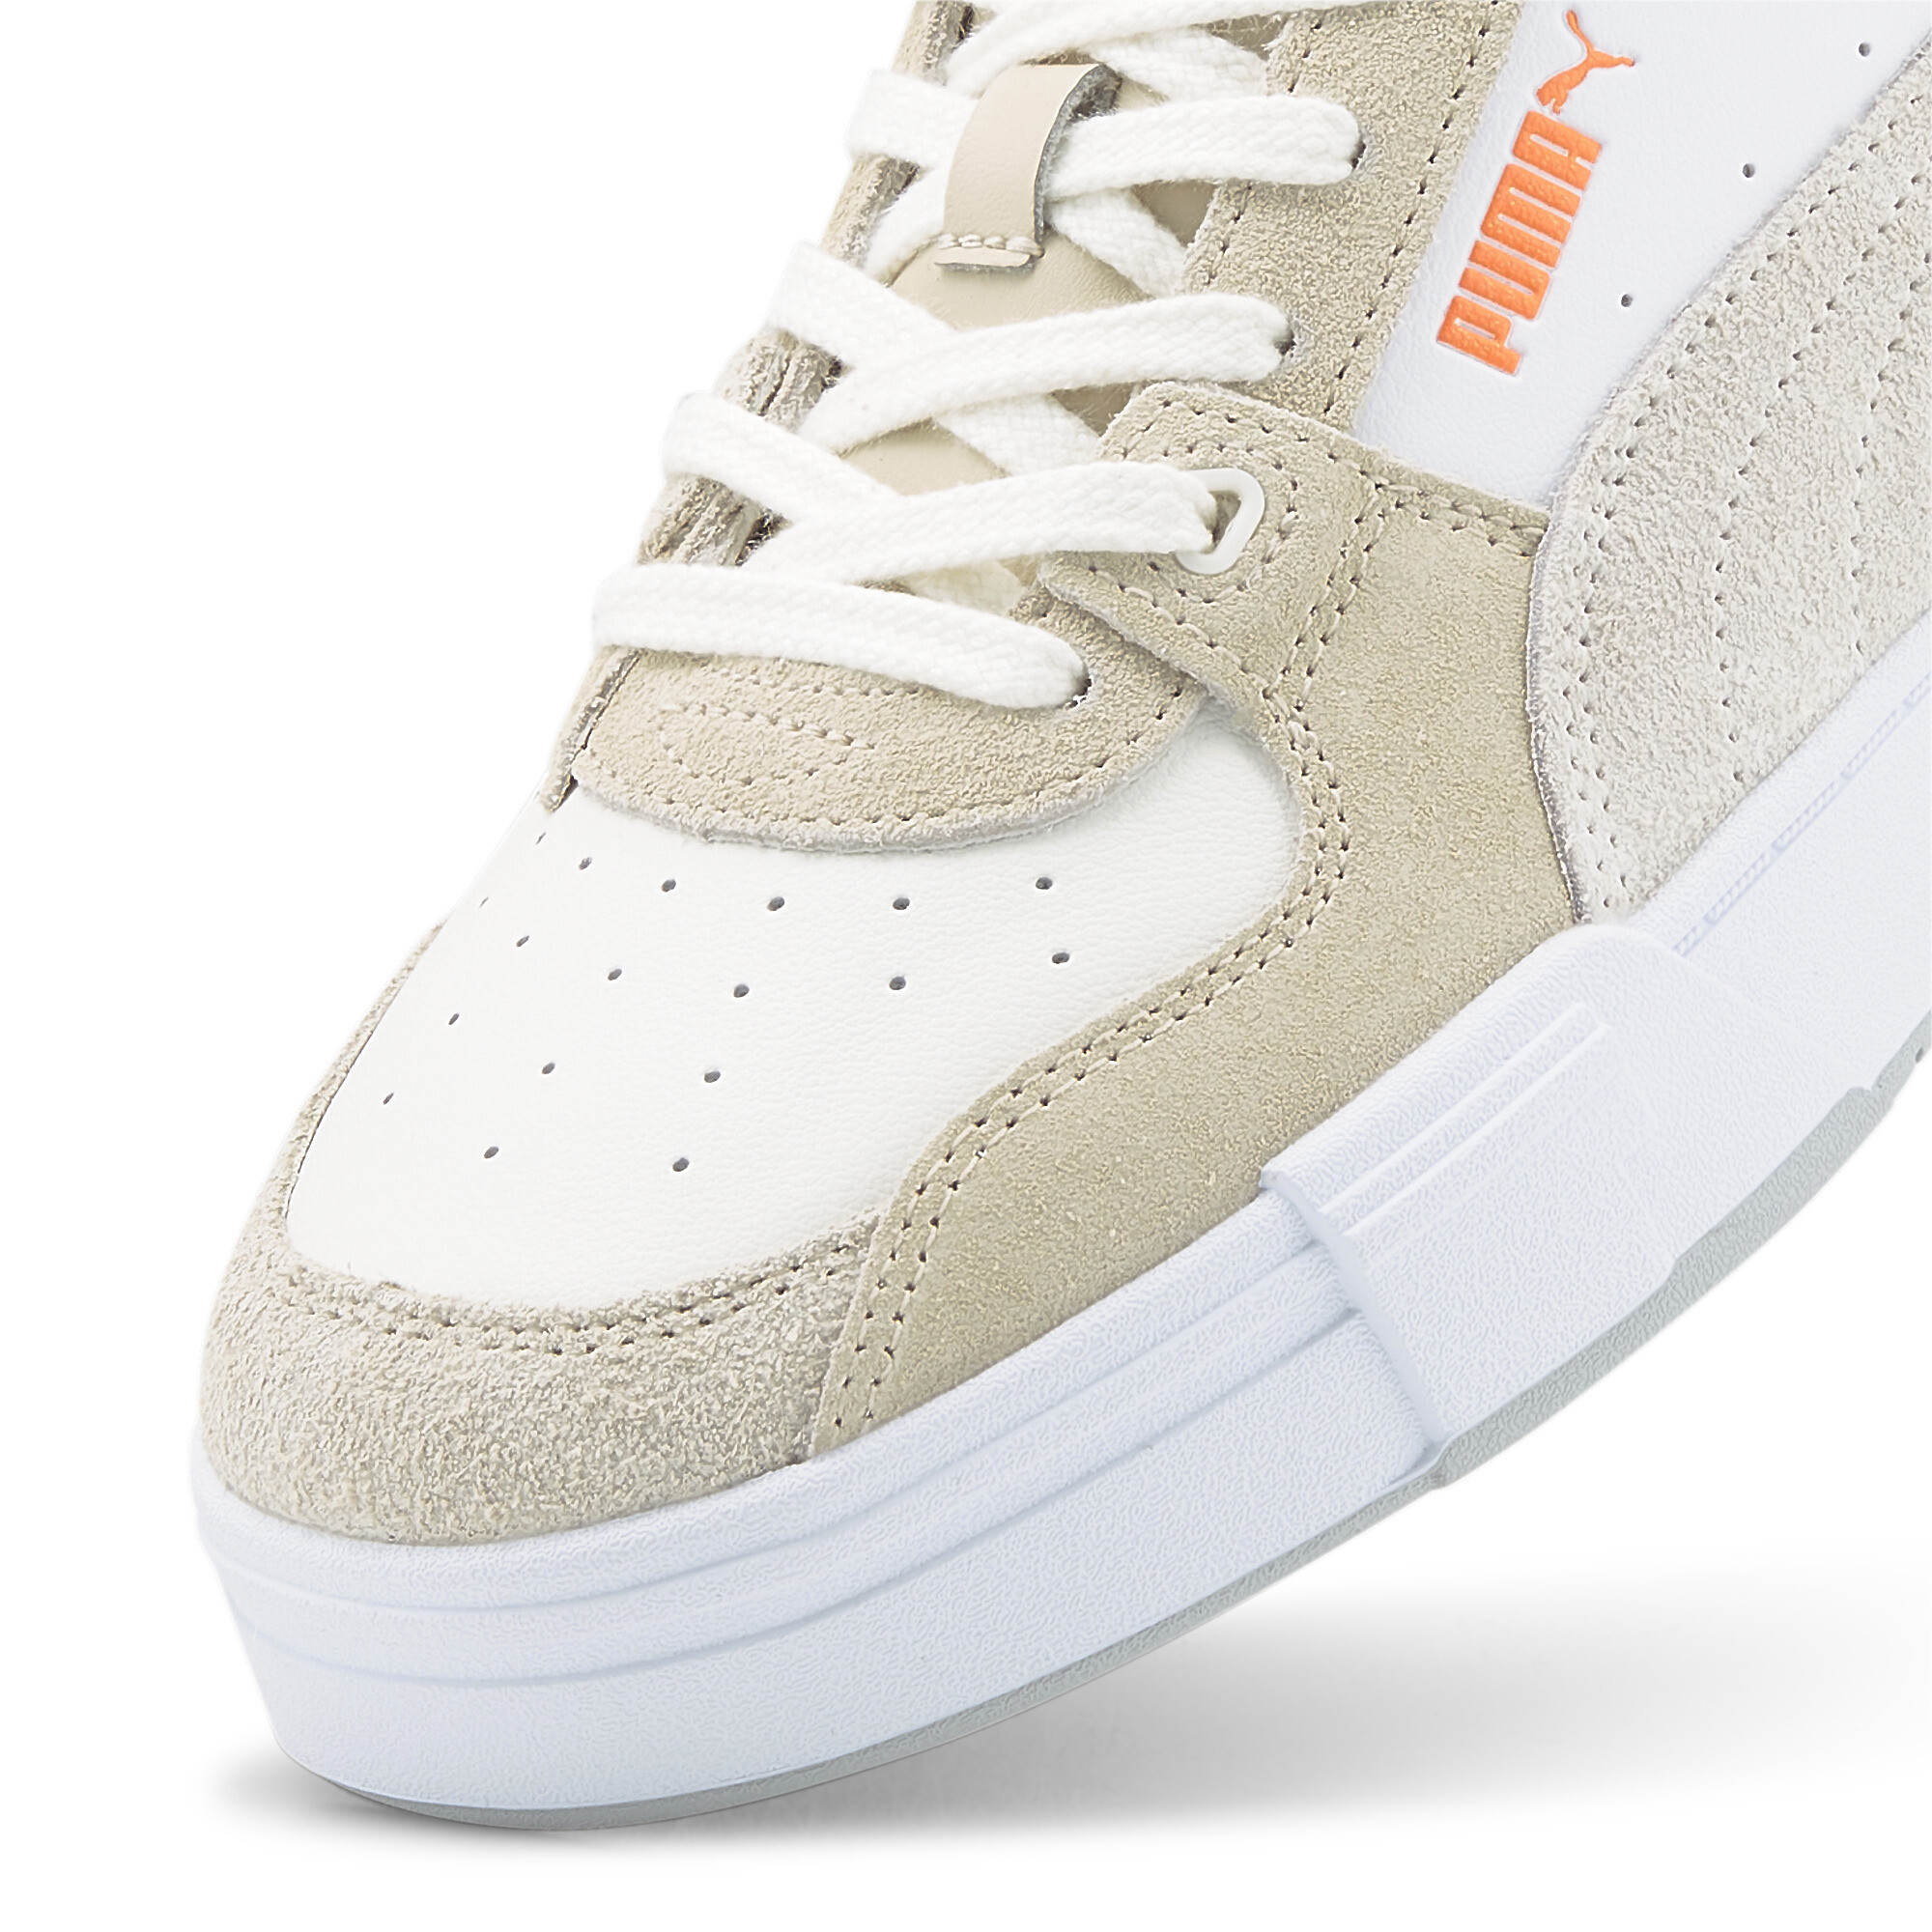 Men's Puma CA Pro Glitch Suede Sneakers, White, Size 40, Shoes